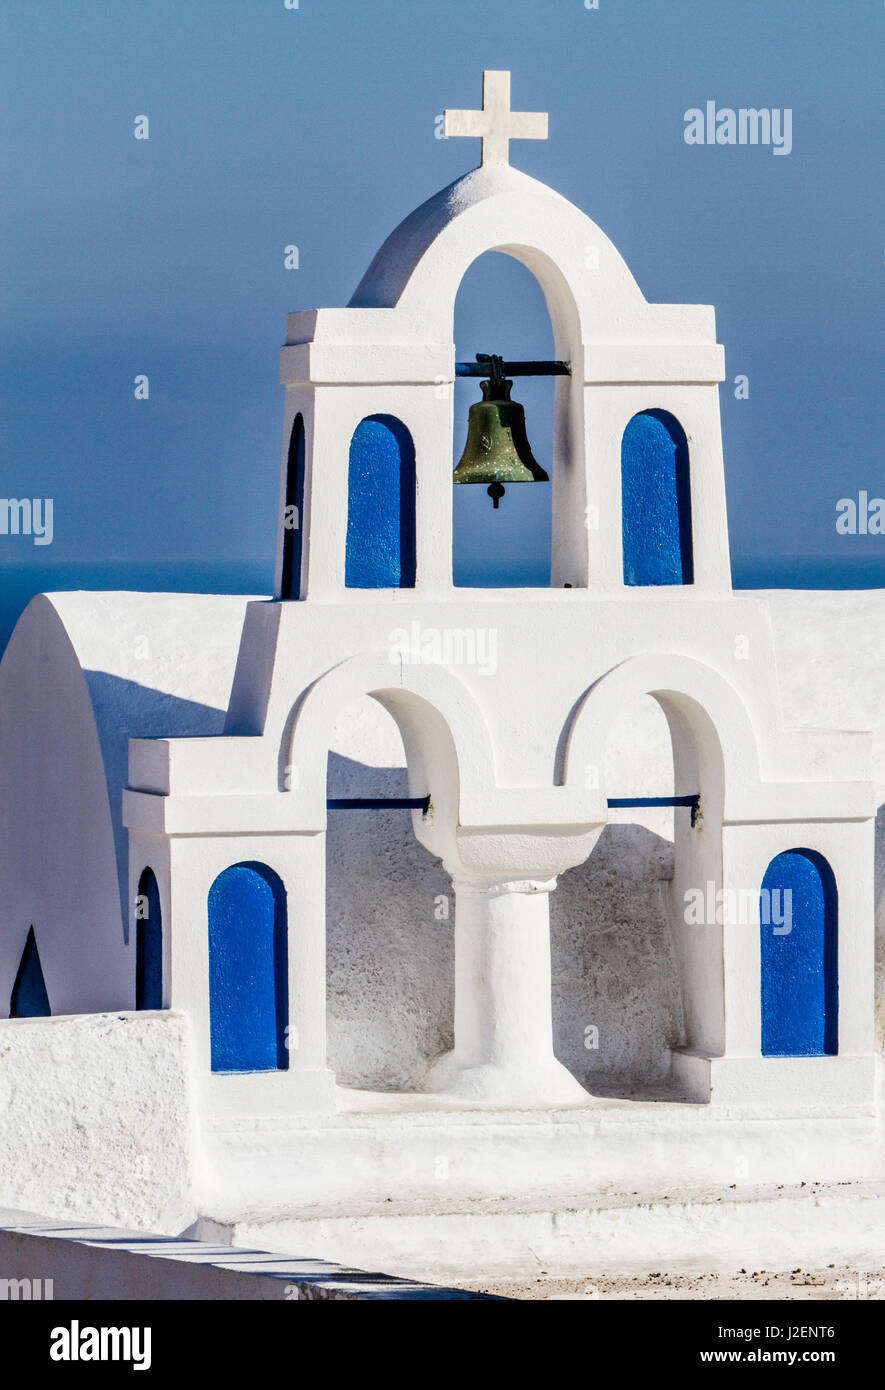 Oia, Greece. Greek Orthodox Church steeple, cross, bell, and blue arches against Aegean Sea Stock Photo